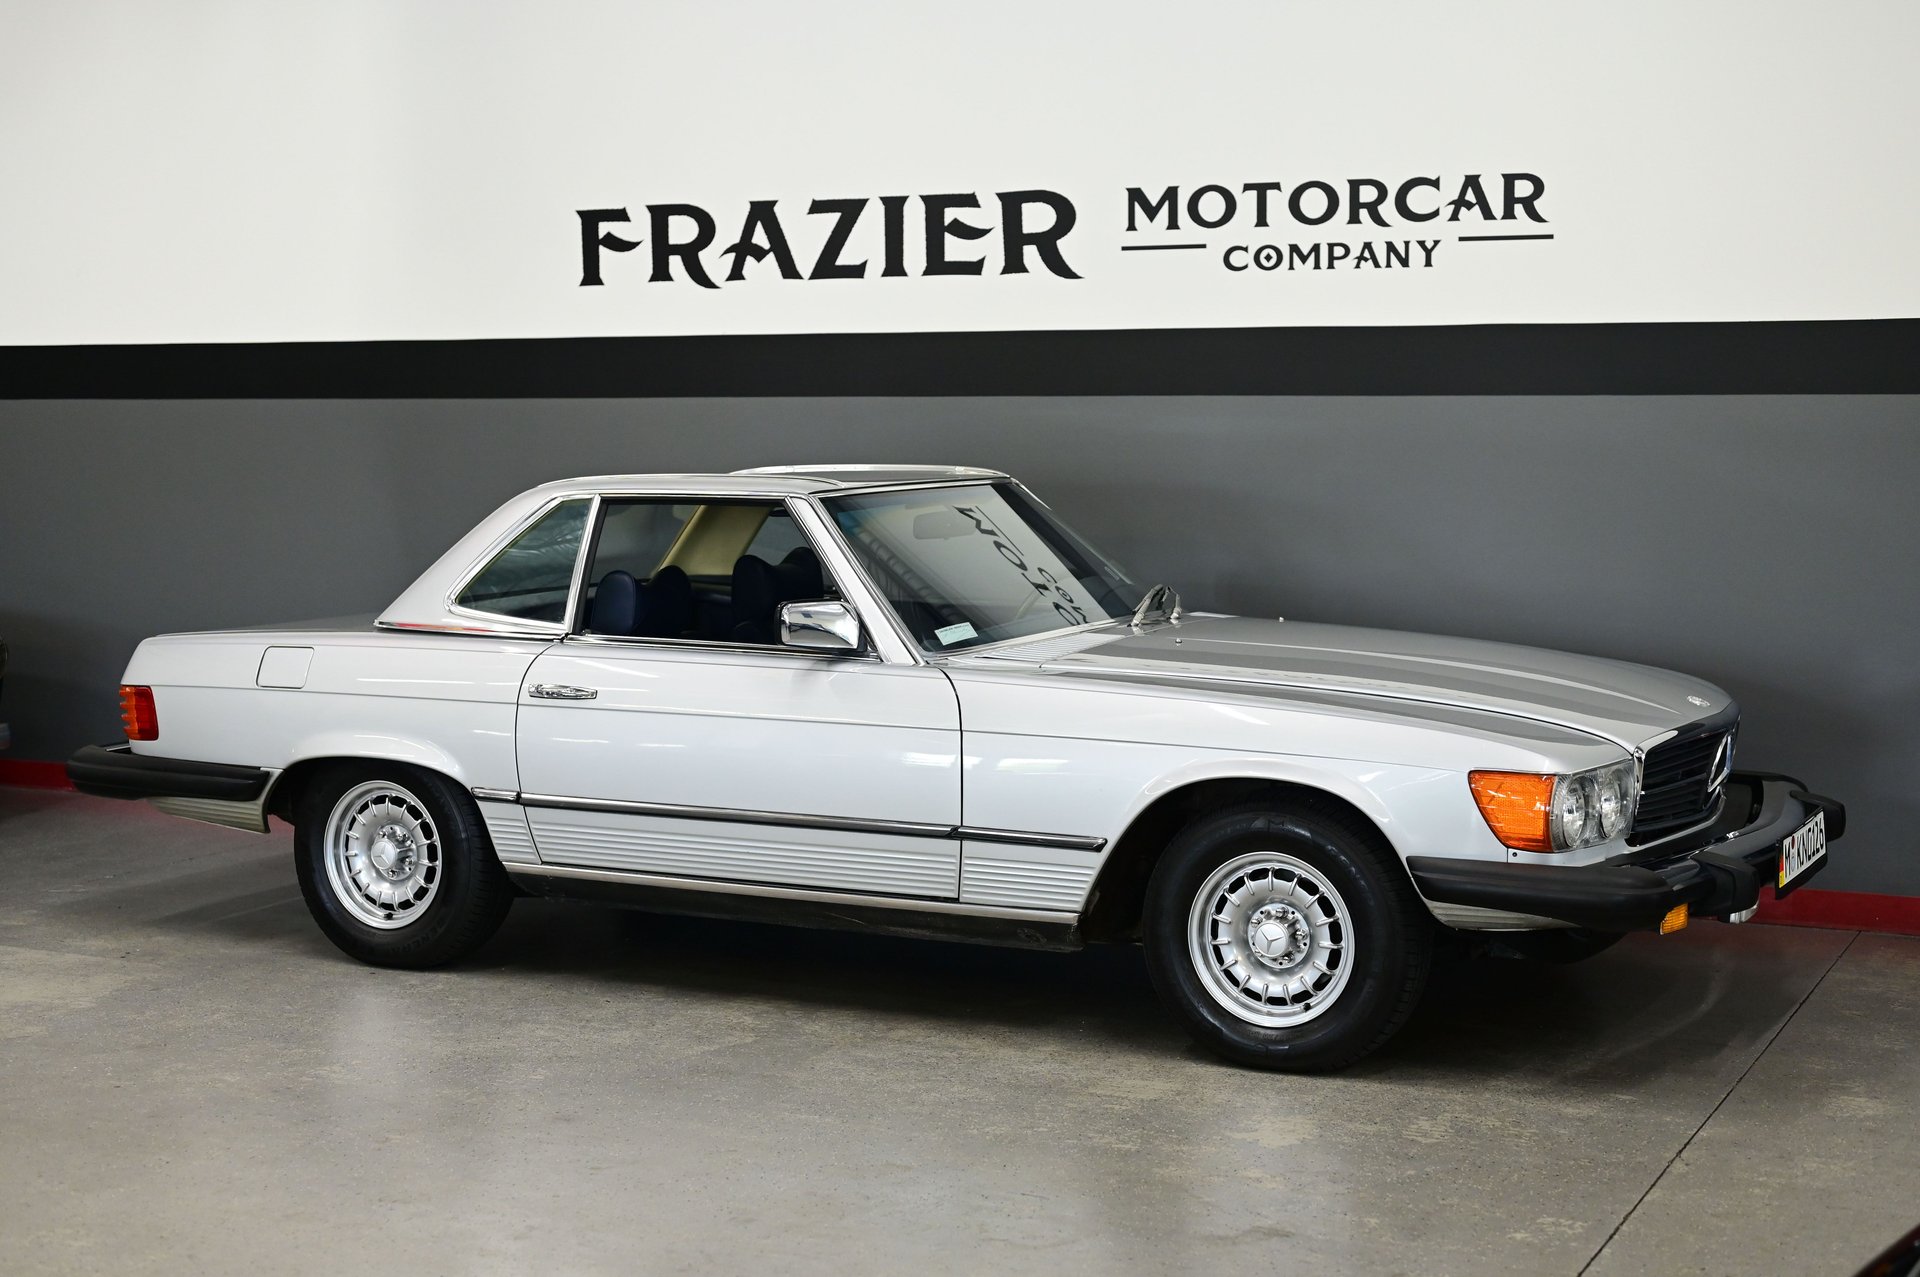 57361 | 1979 Mercedes-Benz 450SL 45600 miles | Frazier Motorcar Company